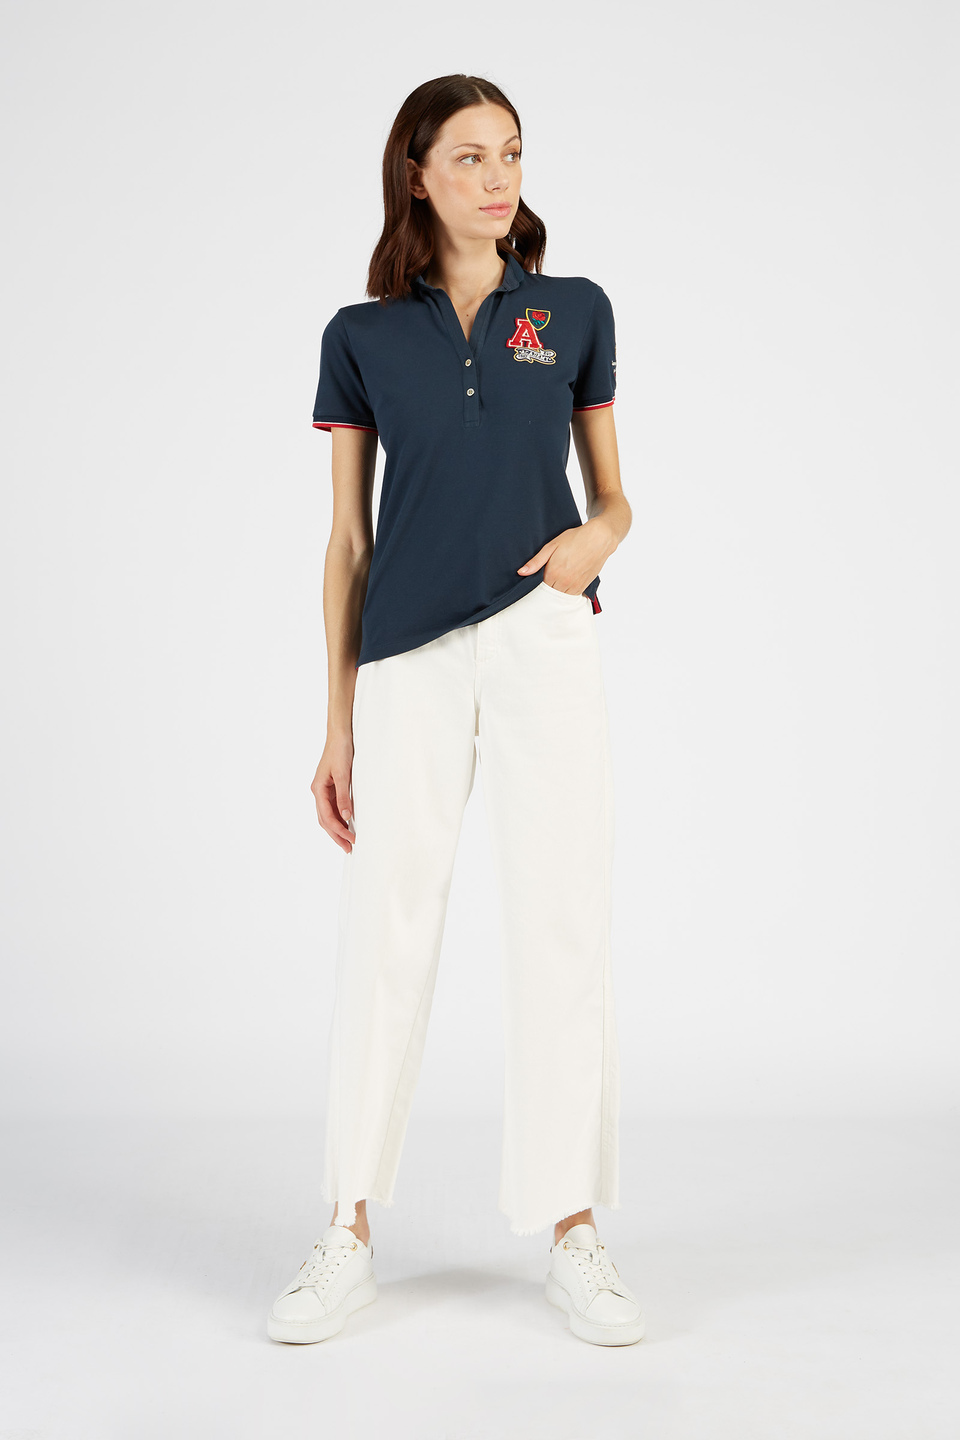 Damen-Poloshirt aus Stretch-Baumwolle mit kurzen Ärmeln | La Martina - Official Online Shop